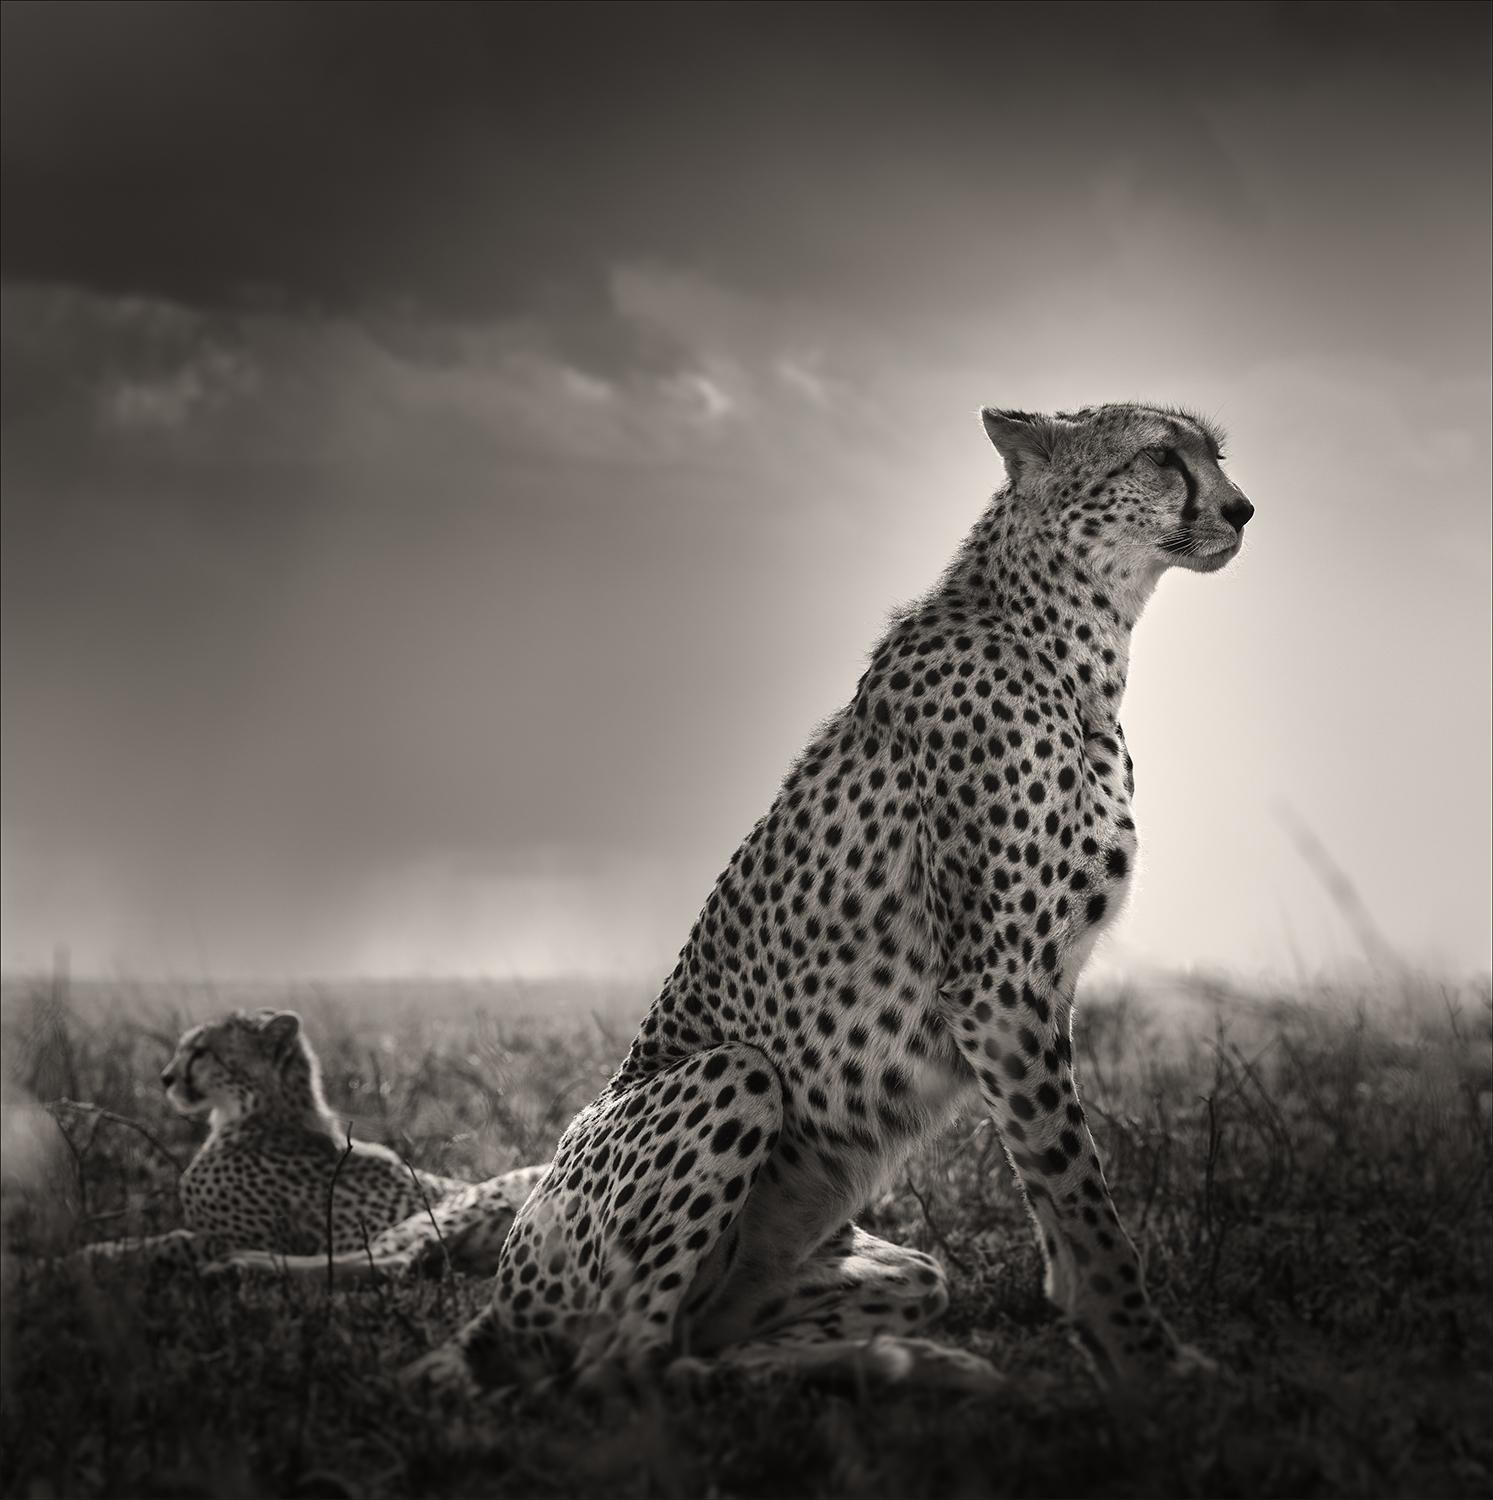 Joachim Schmeisser Portrait Photograph - Black Tears I, animal, wildlife, black and white photography, cheetah